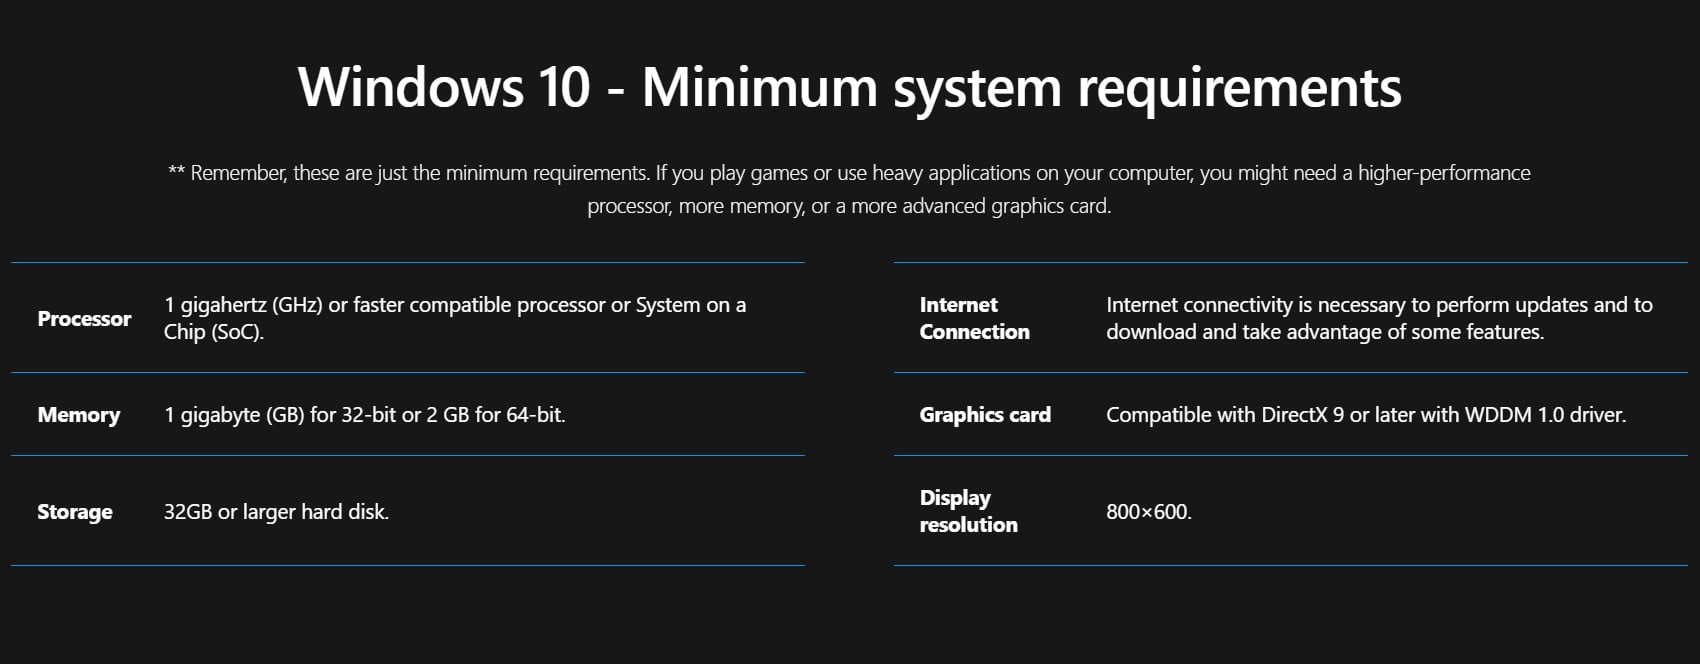 Windows 10 Pro lifetime Key - Requirements